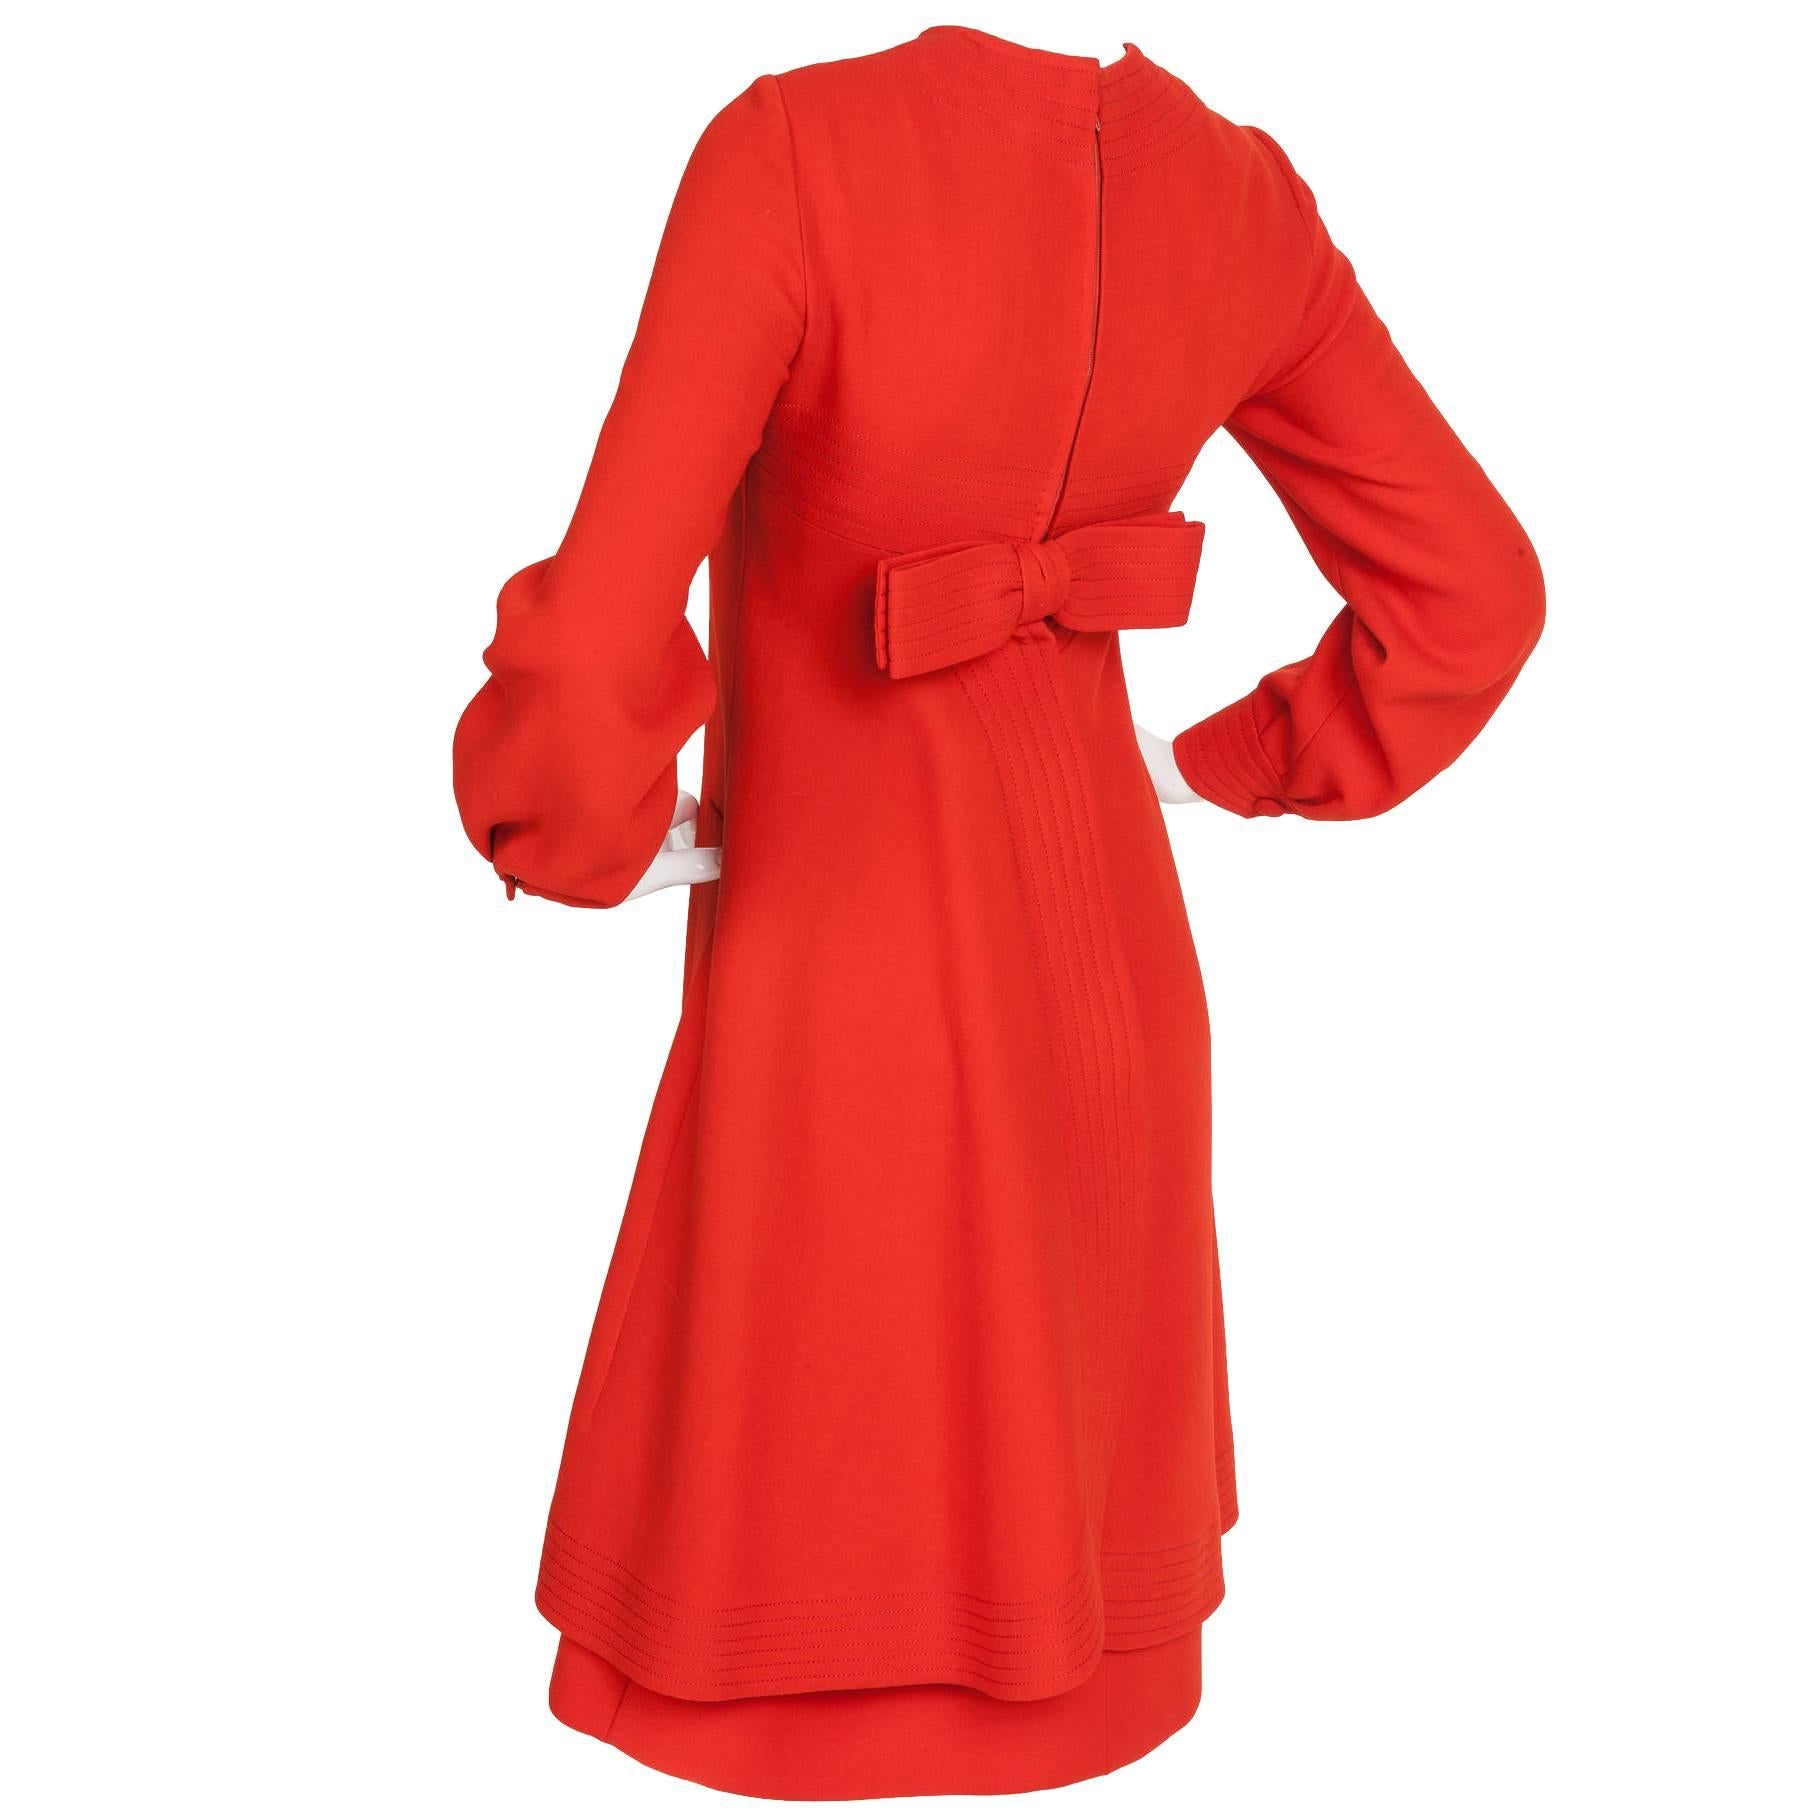 Pierre Cardin Red Wool Dress w/Channel Stitched Design Motif ca. 1970 ...